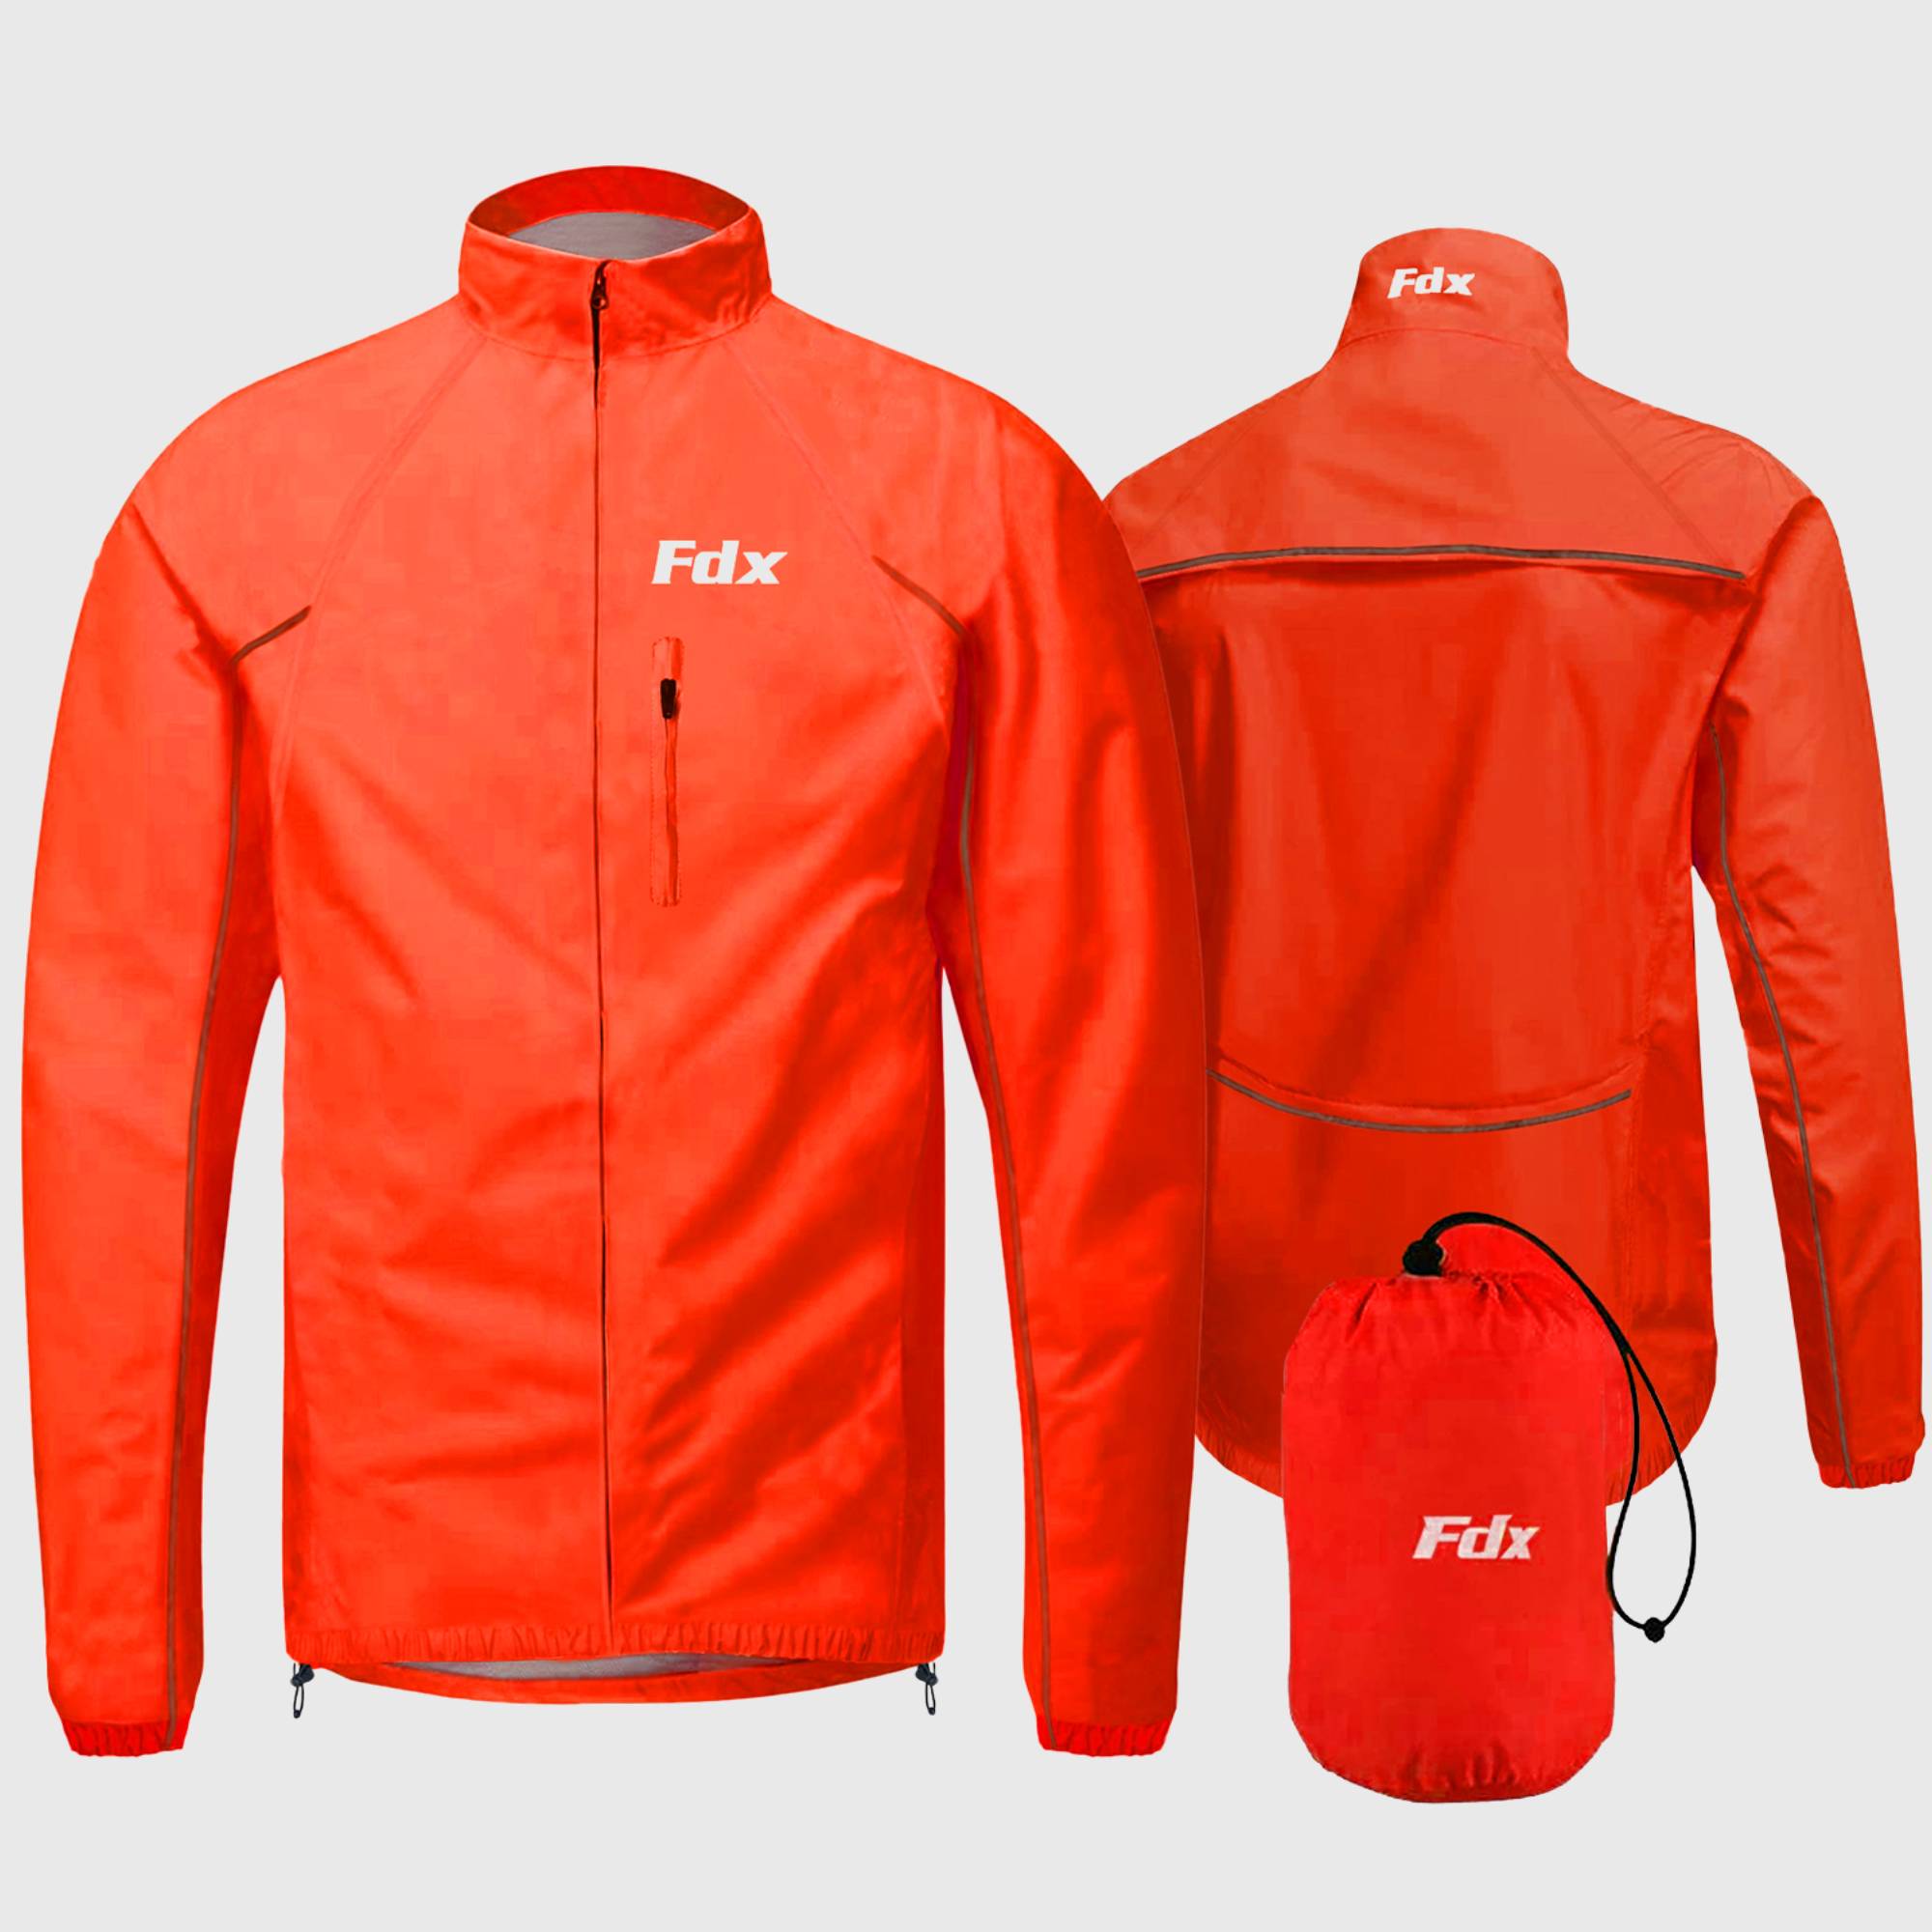 Fdx Defray Red Men's Waterproof Cycling Jacket